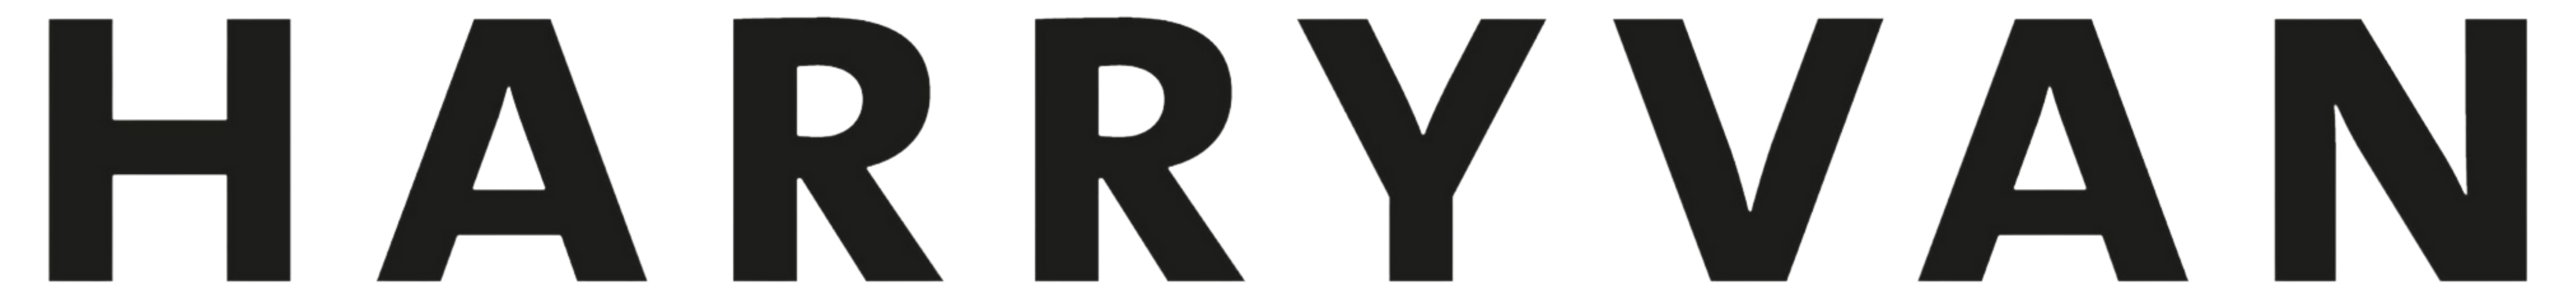 Harryvan logo